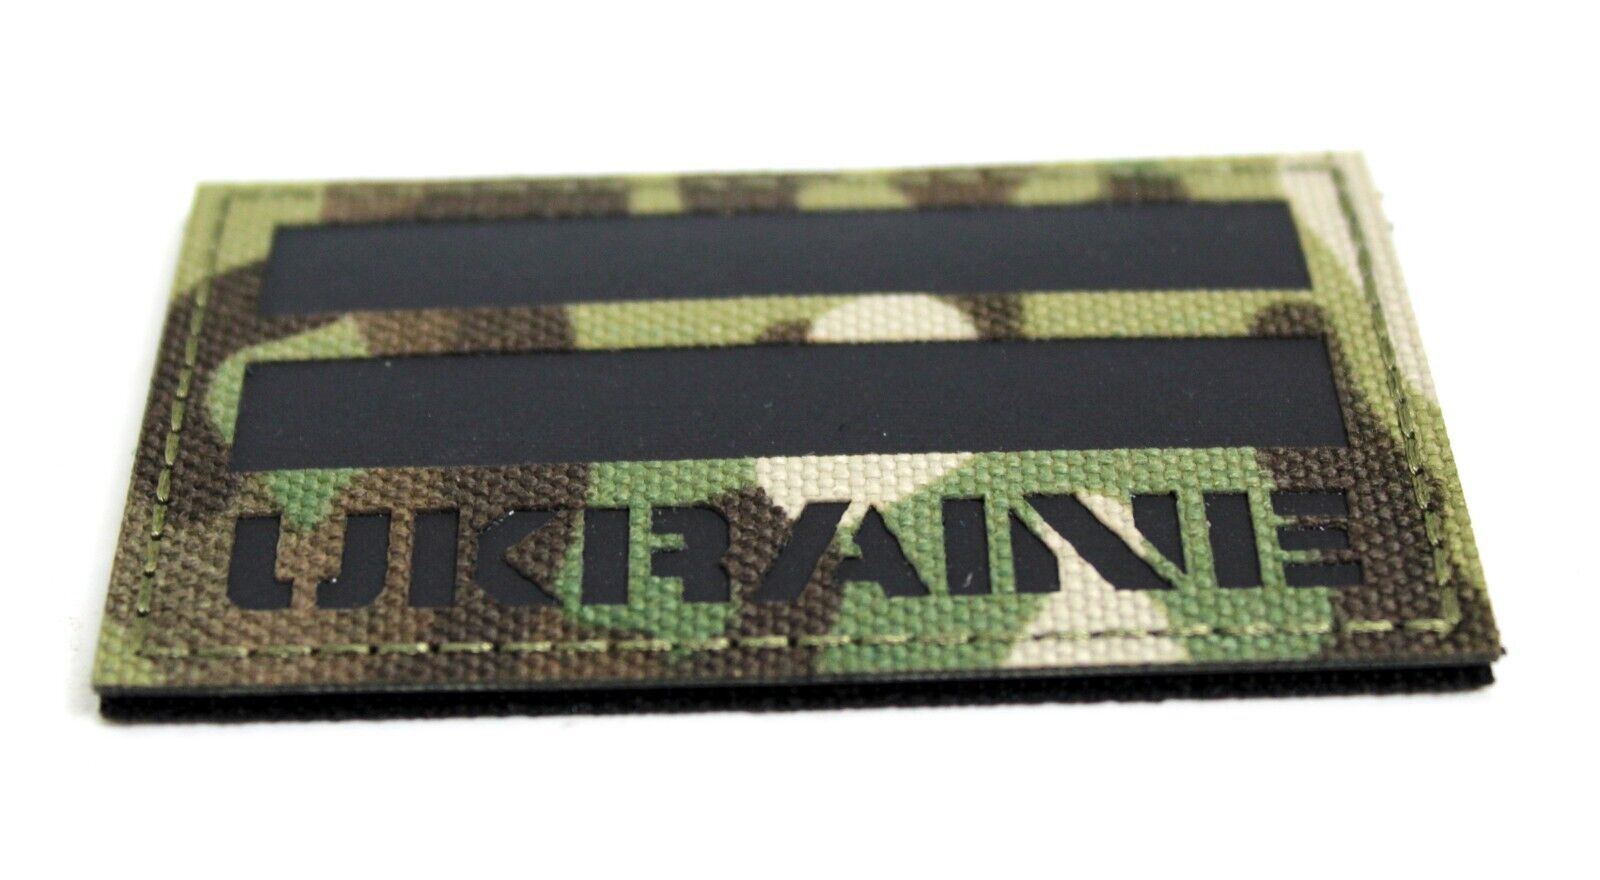 UKRAINE Badge MULTICAM Patch MTP Army Military Uniform Insignia Latest Issue